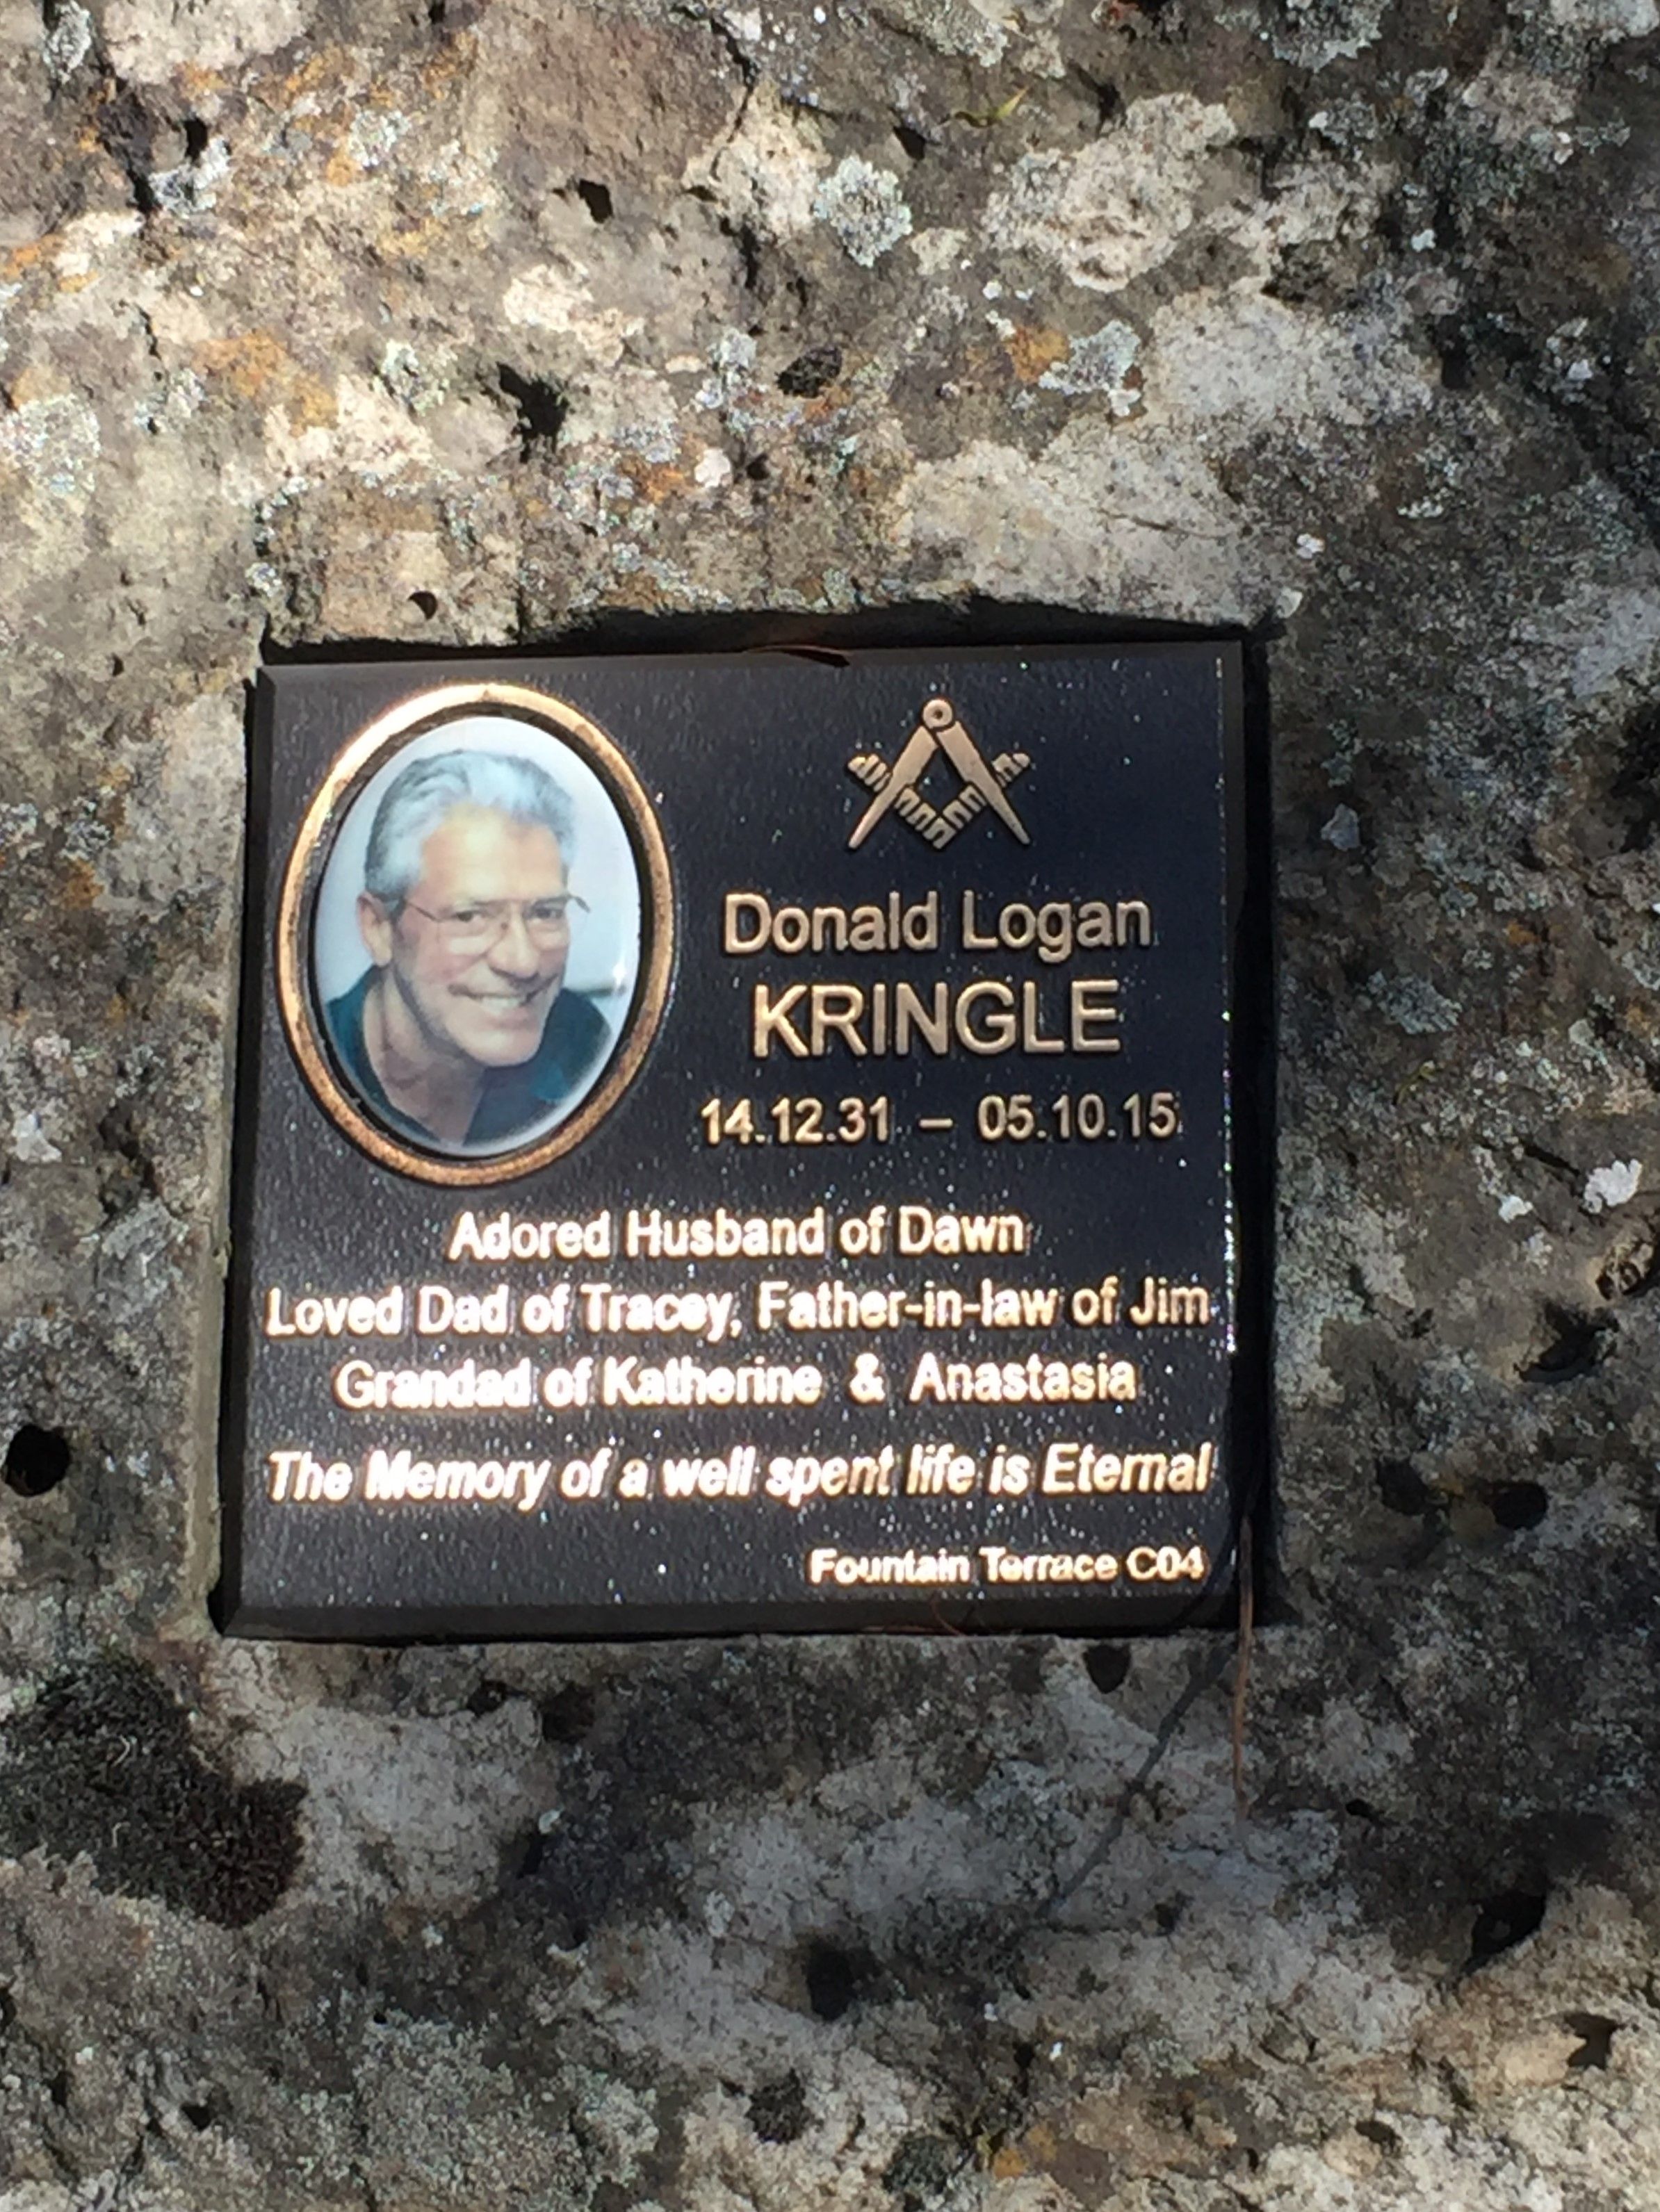 Donald Logan Kringle (1931-2015)